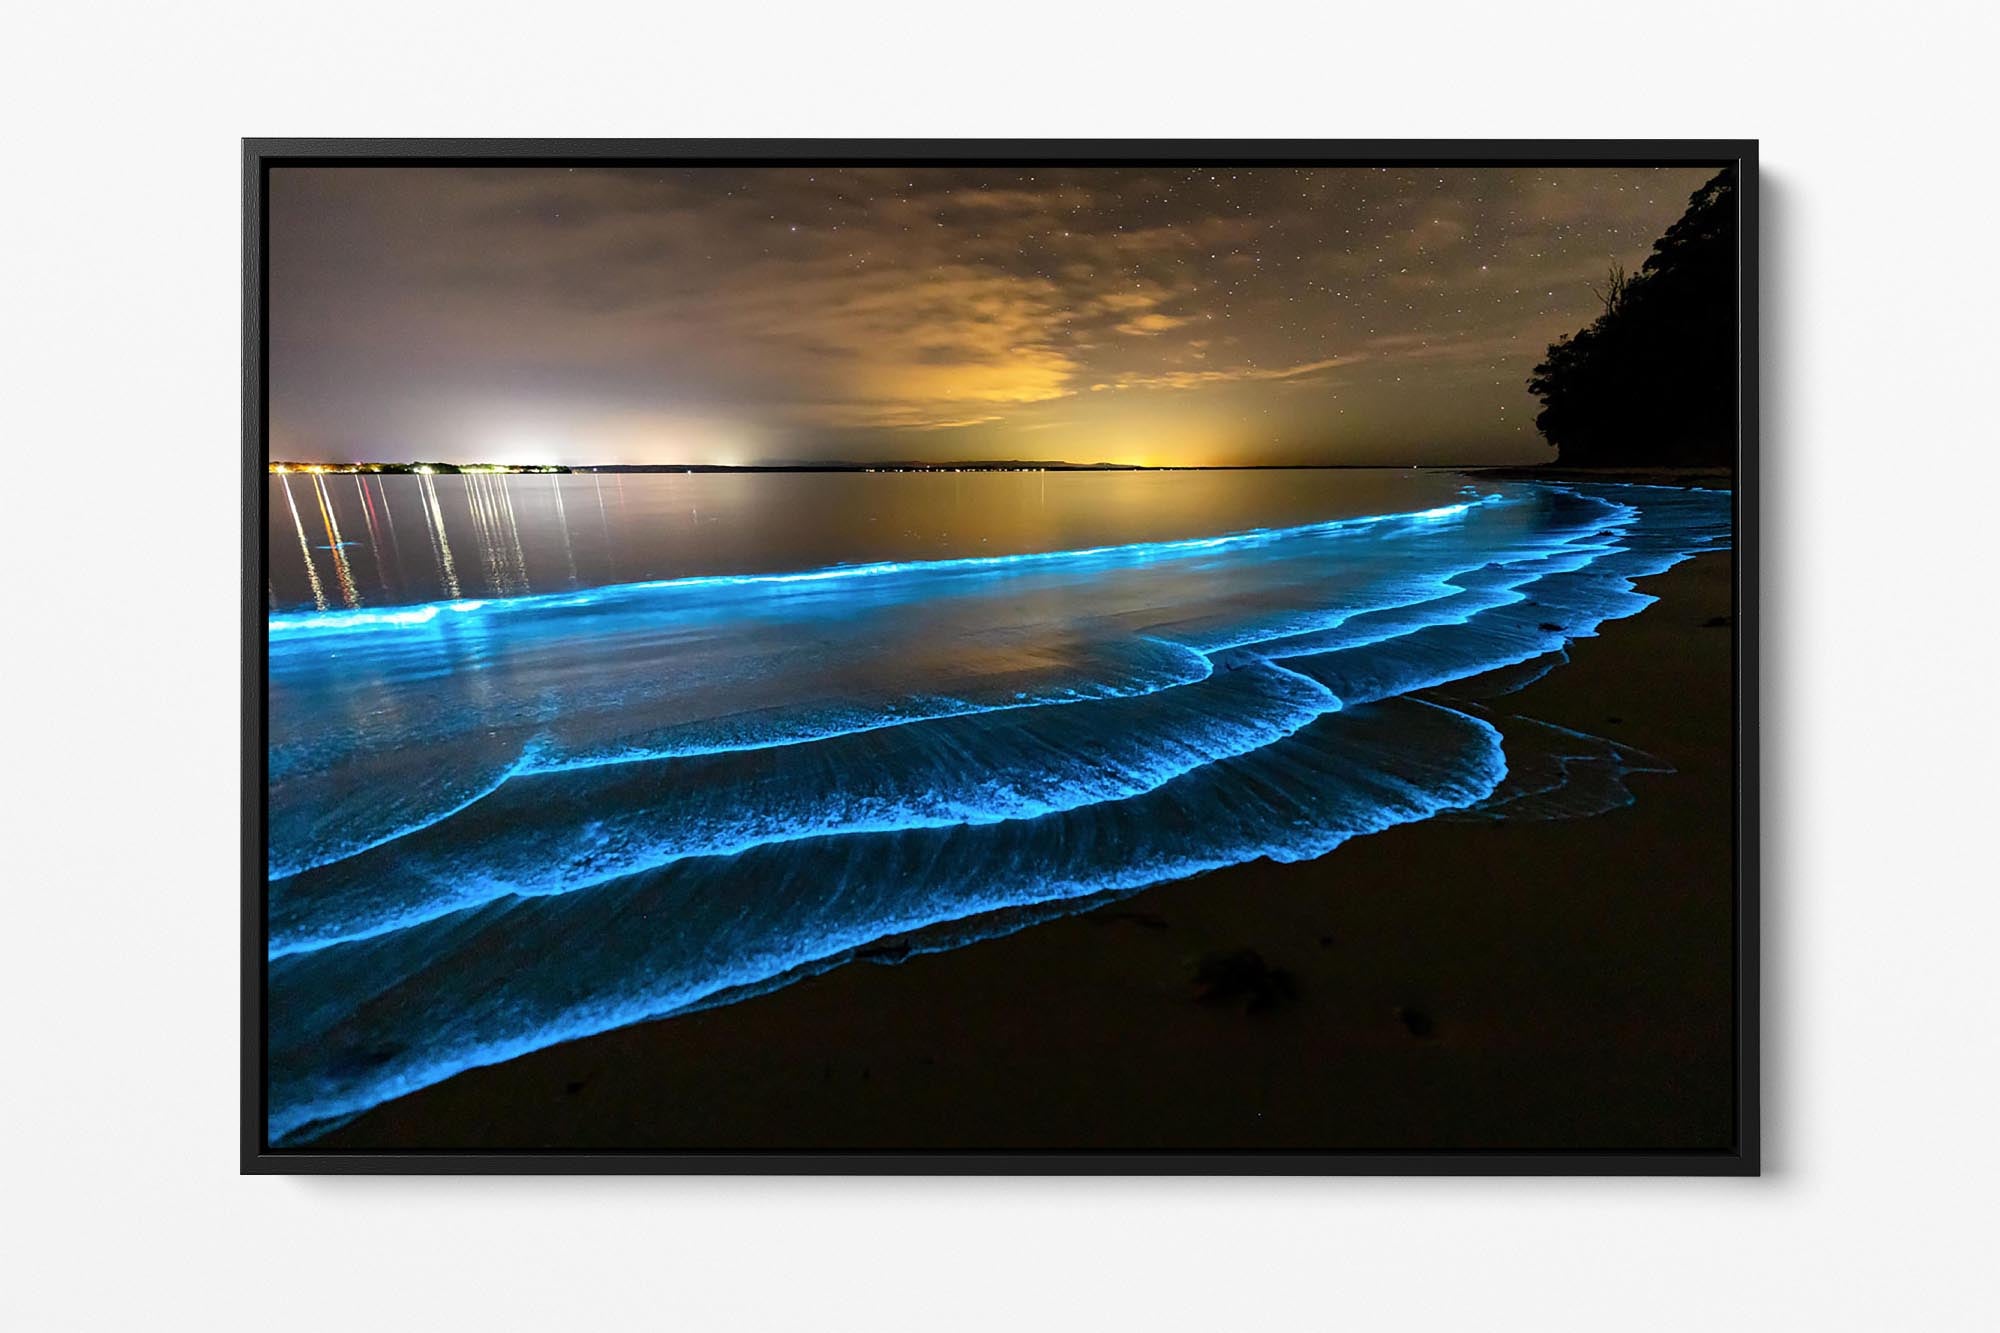 Bioluminescence | Jervis Bay